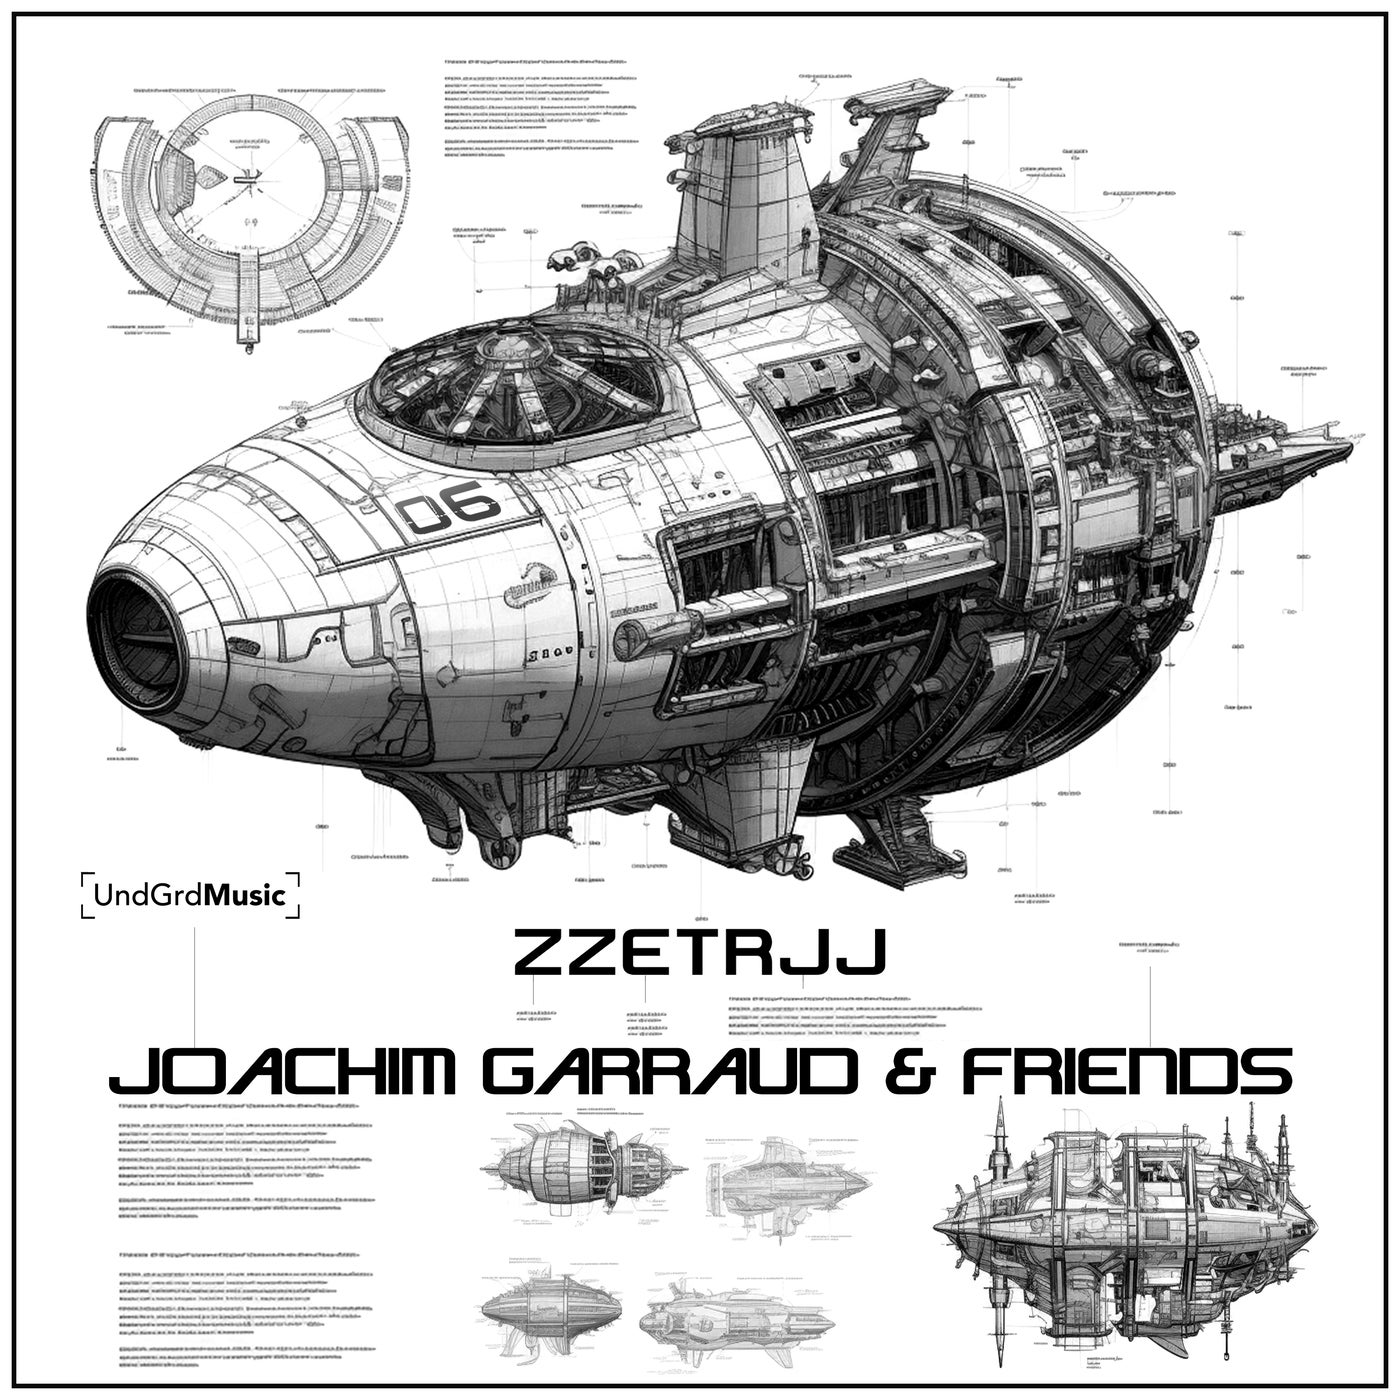 Joachim Garraud & Friends - ZZETRJJ